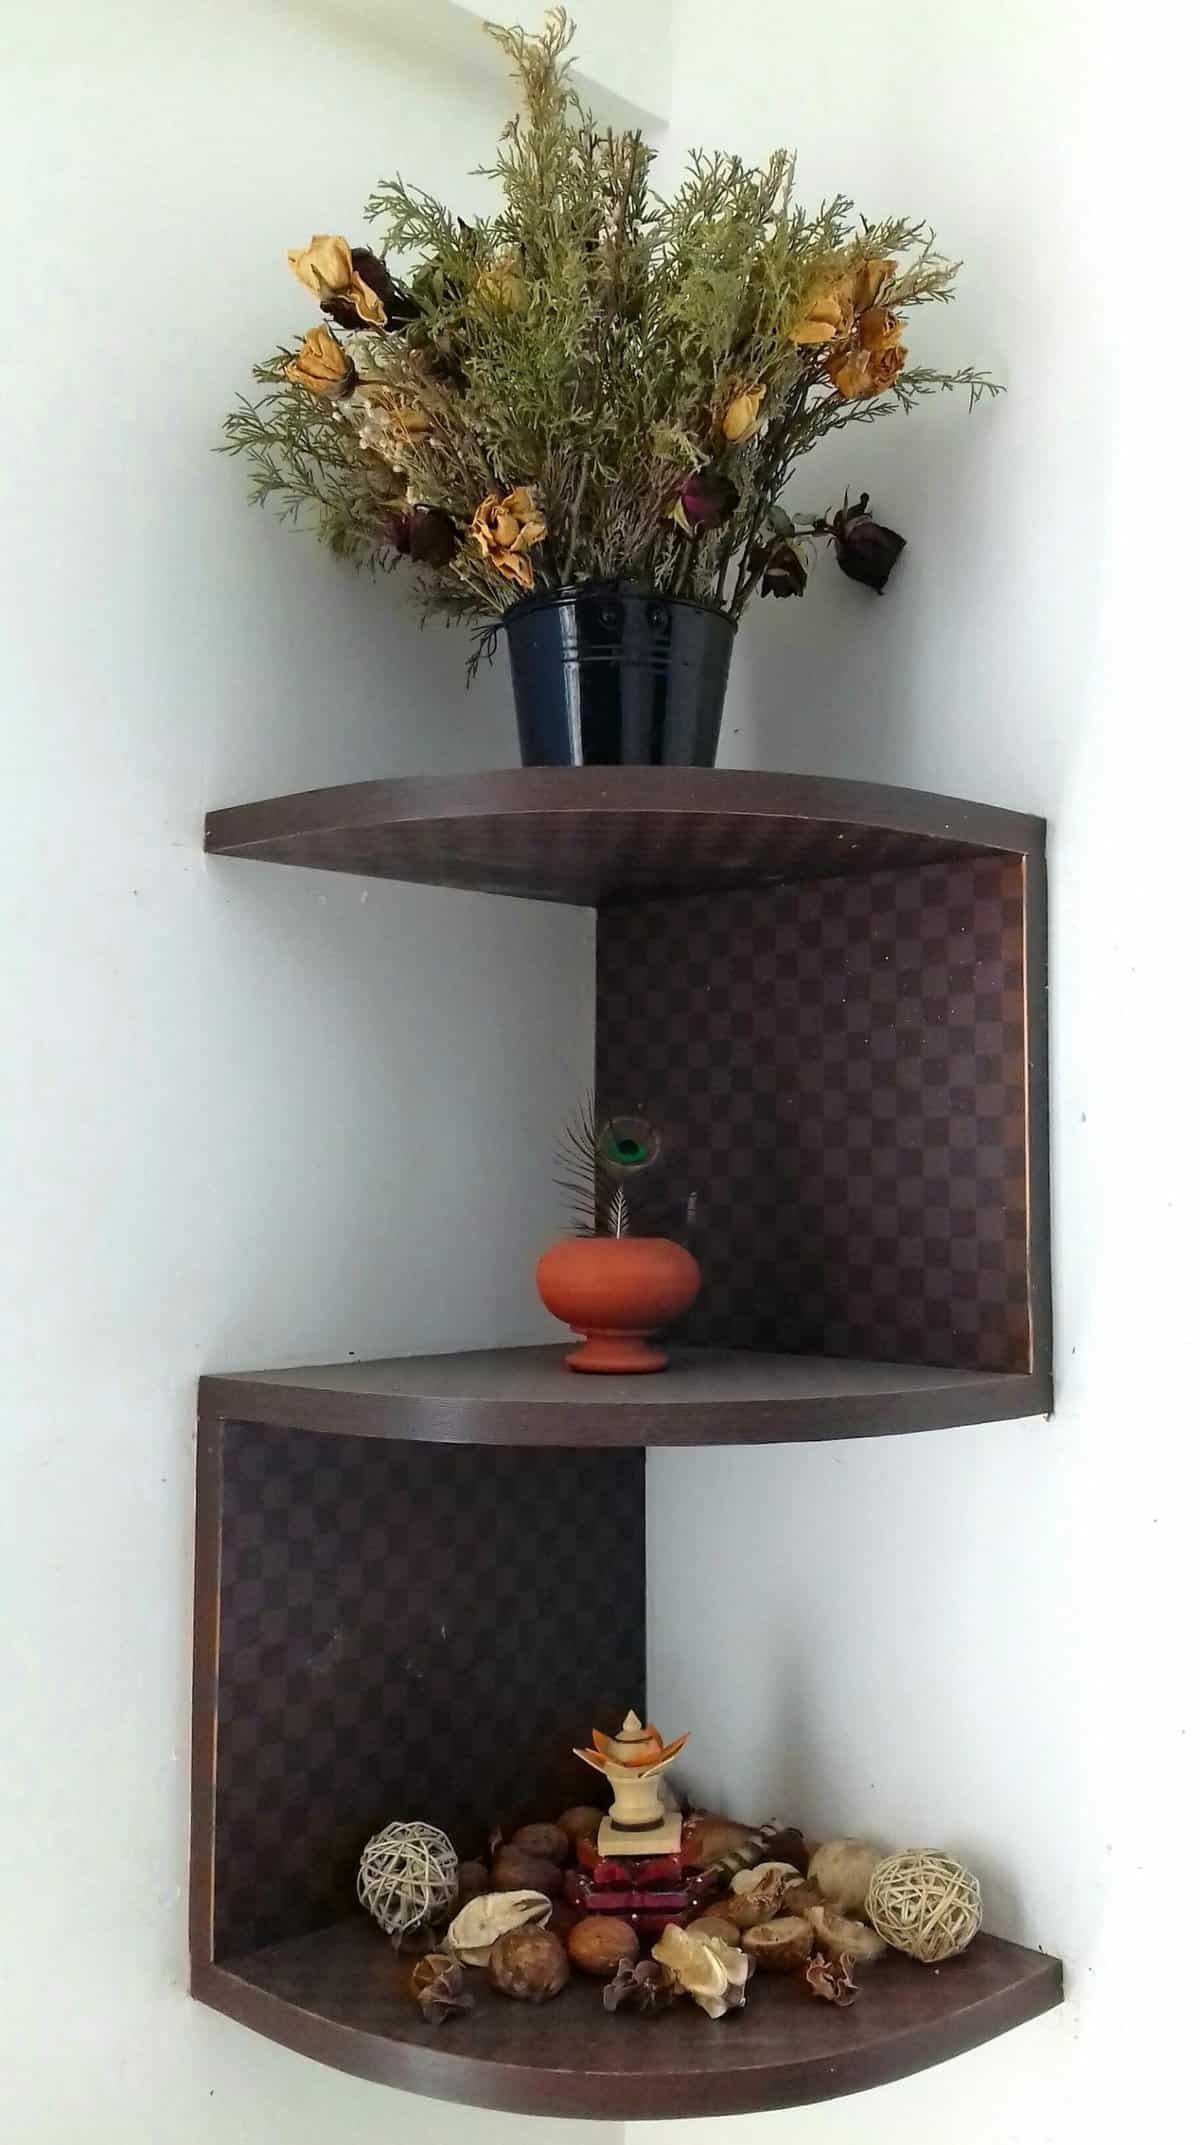 corner shelf with plant and decor